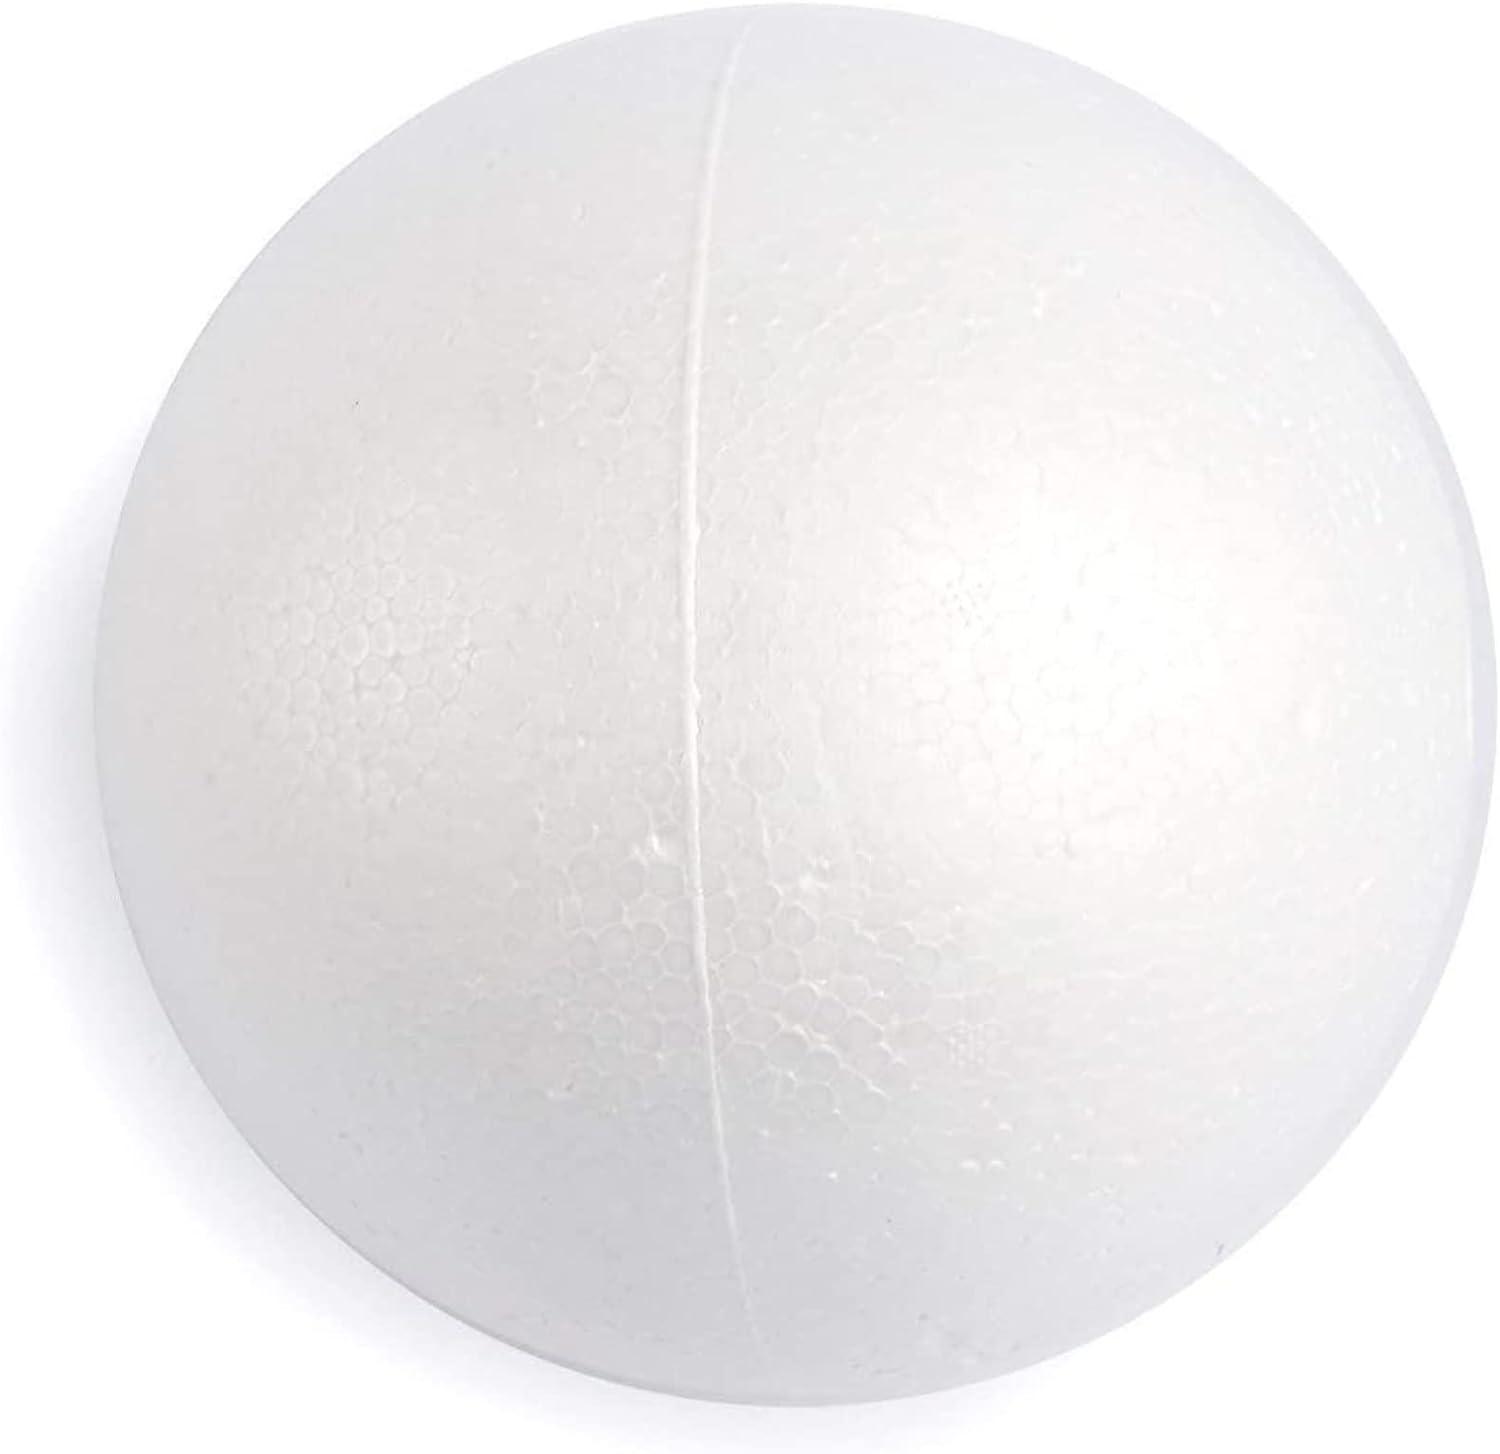  Foam Balls,12 Pack Foam Ball Smooth Polystyrene Foam